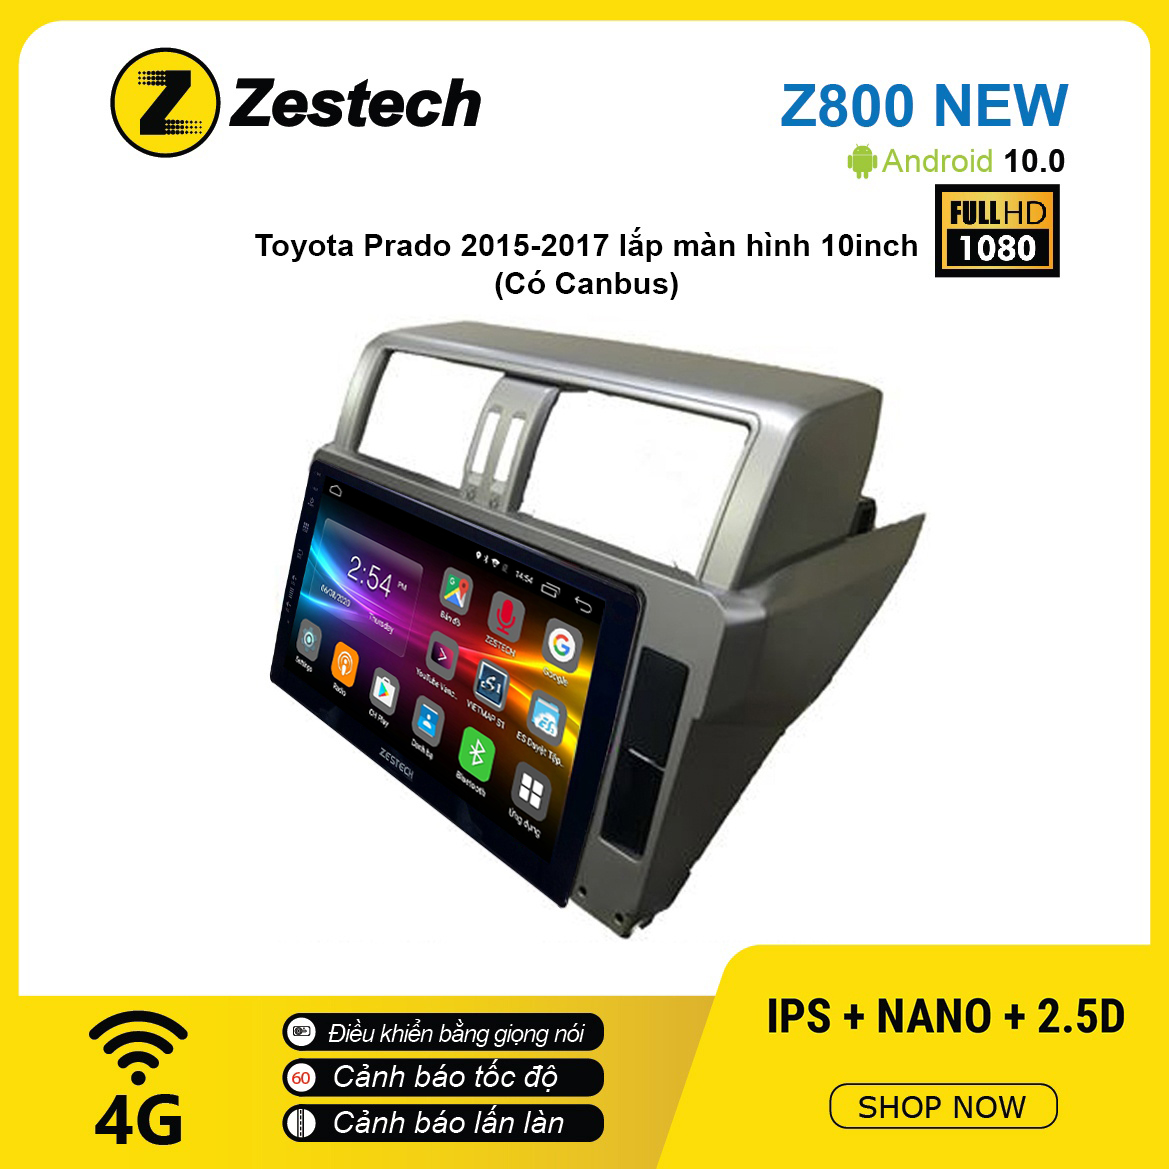 Man Hinh O To Dvd Android Z800 New Toyota Prado 15 17 Zestech